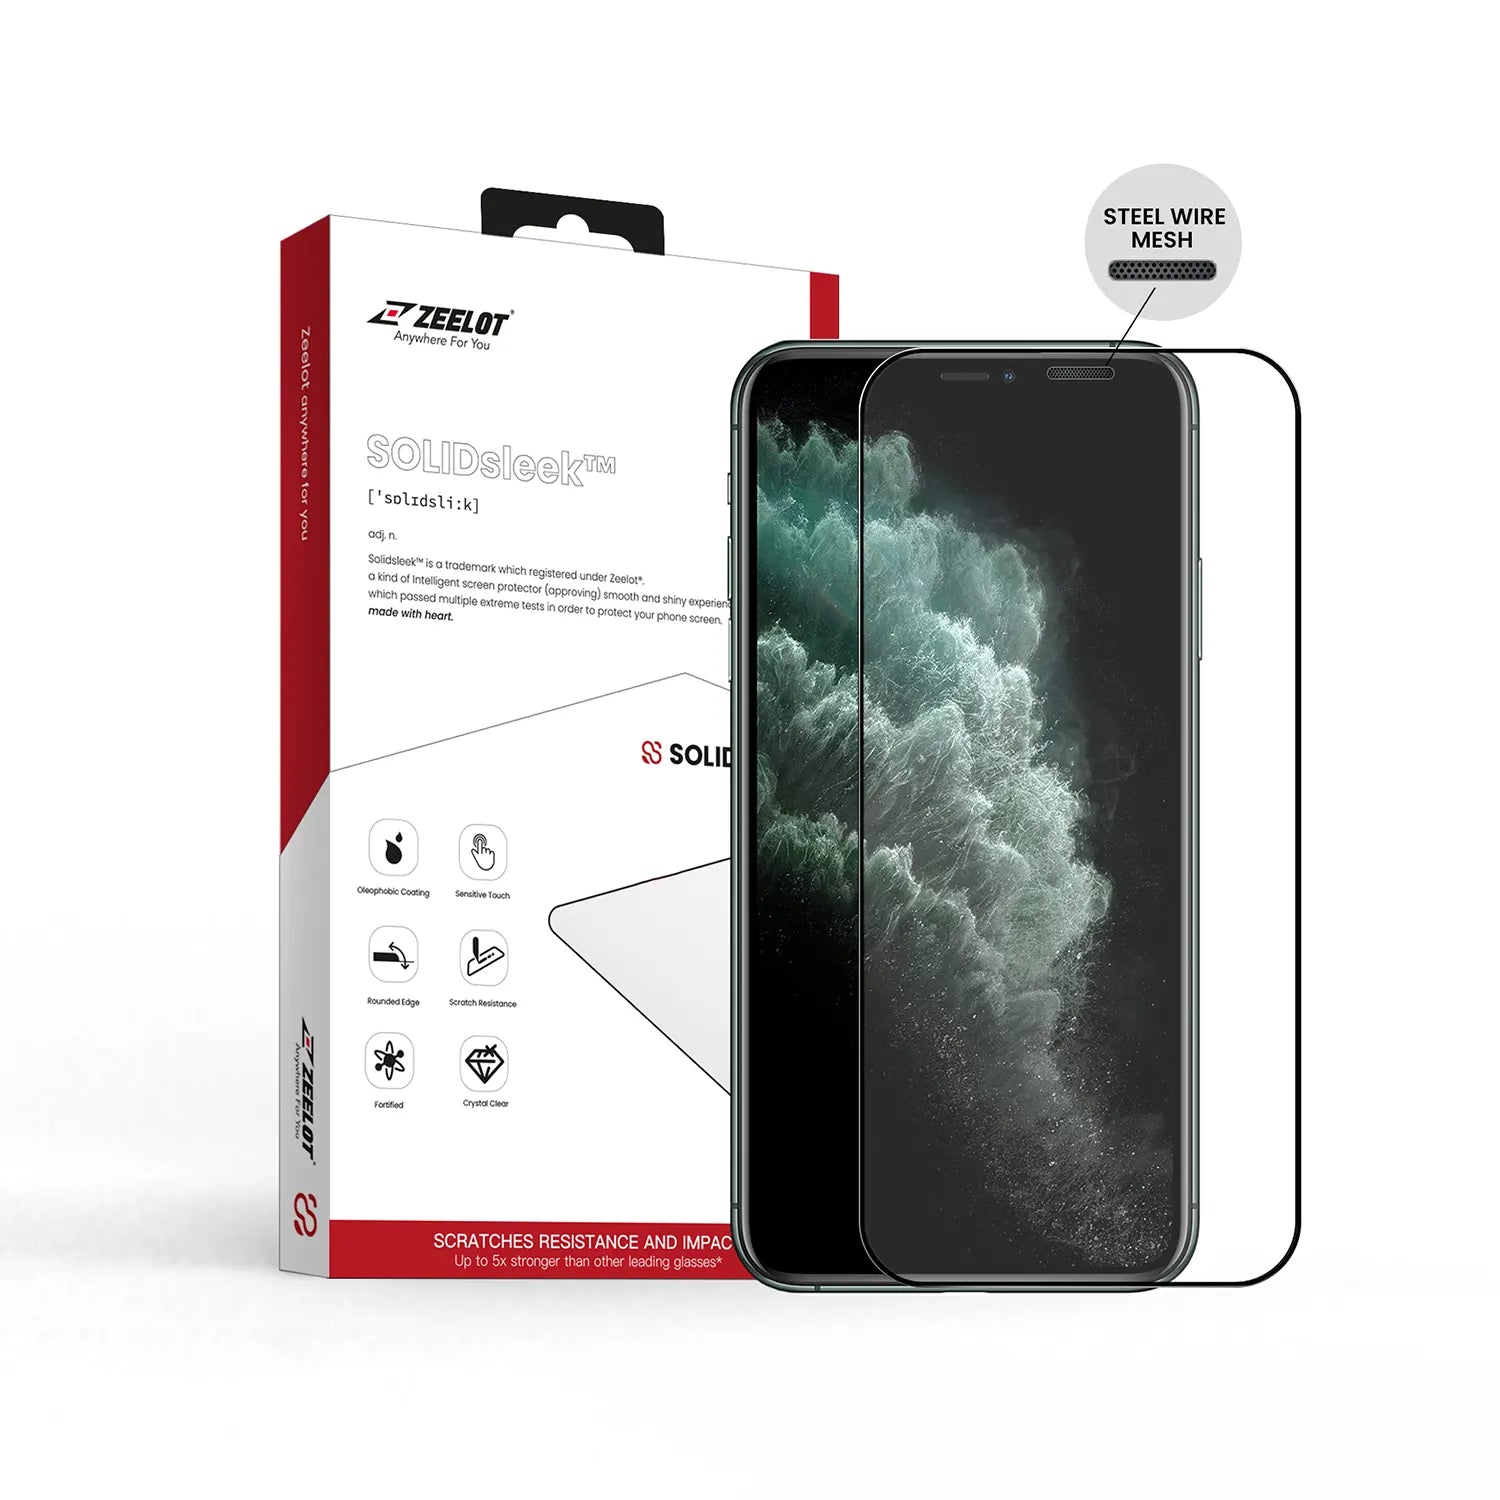 ZEELOT PureGlass 2.5D Steel Wire Tempered Glass Screen Protector for iPhone 11 (2019) Series,